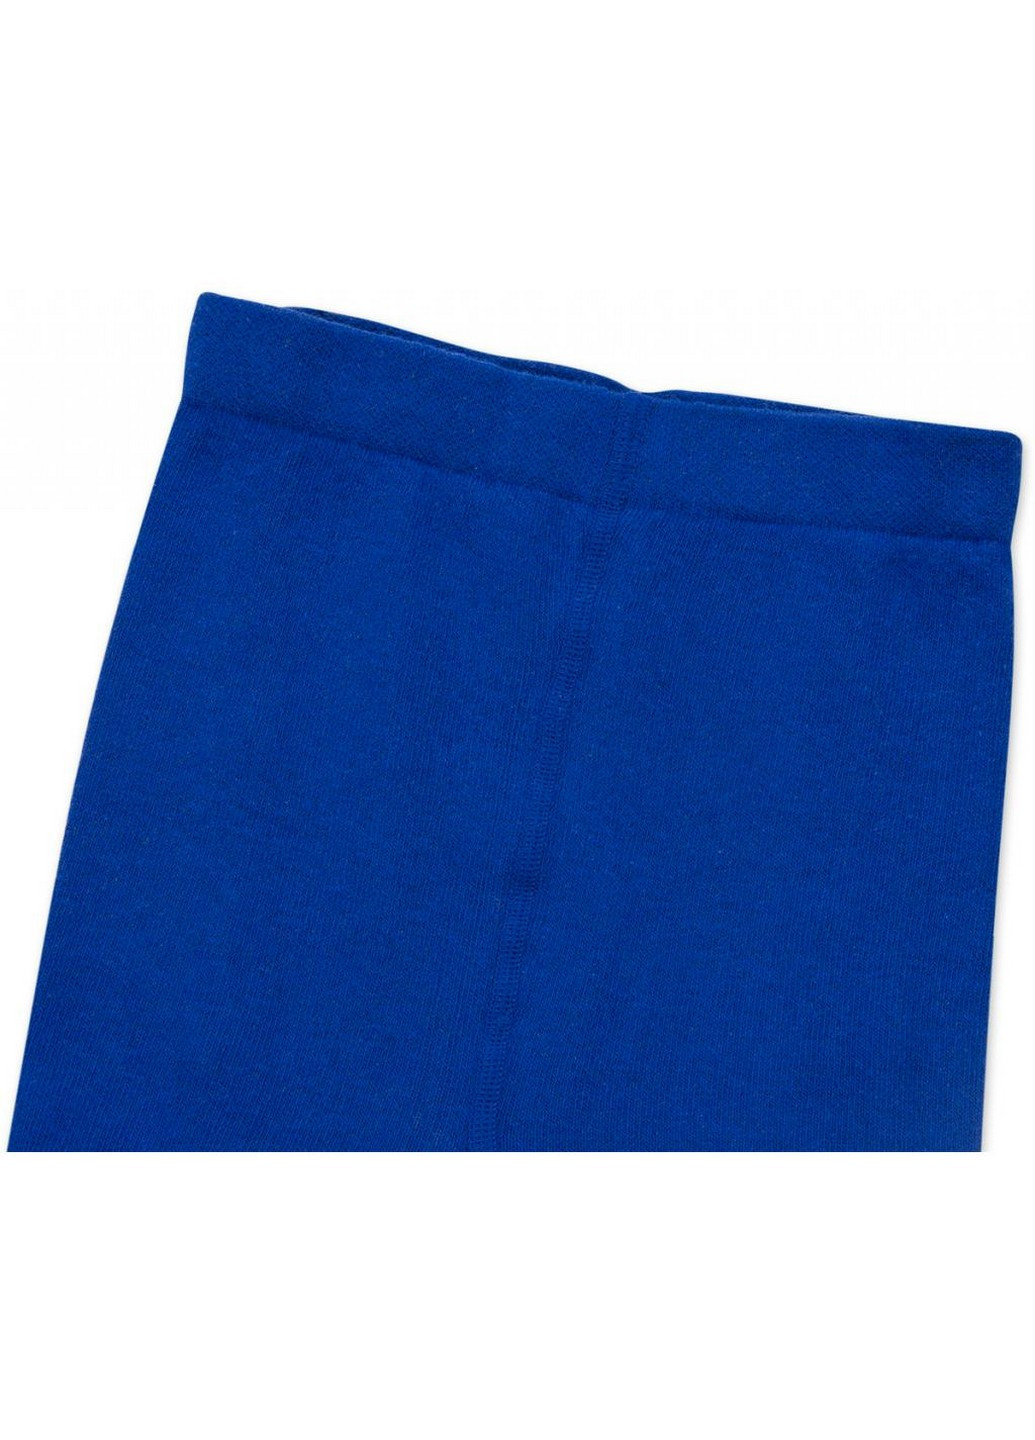 Колготки с машиной синие (10848-5-7B-blue) Bross (198462453)